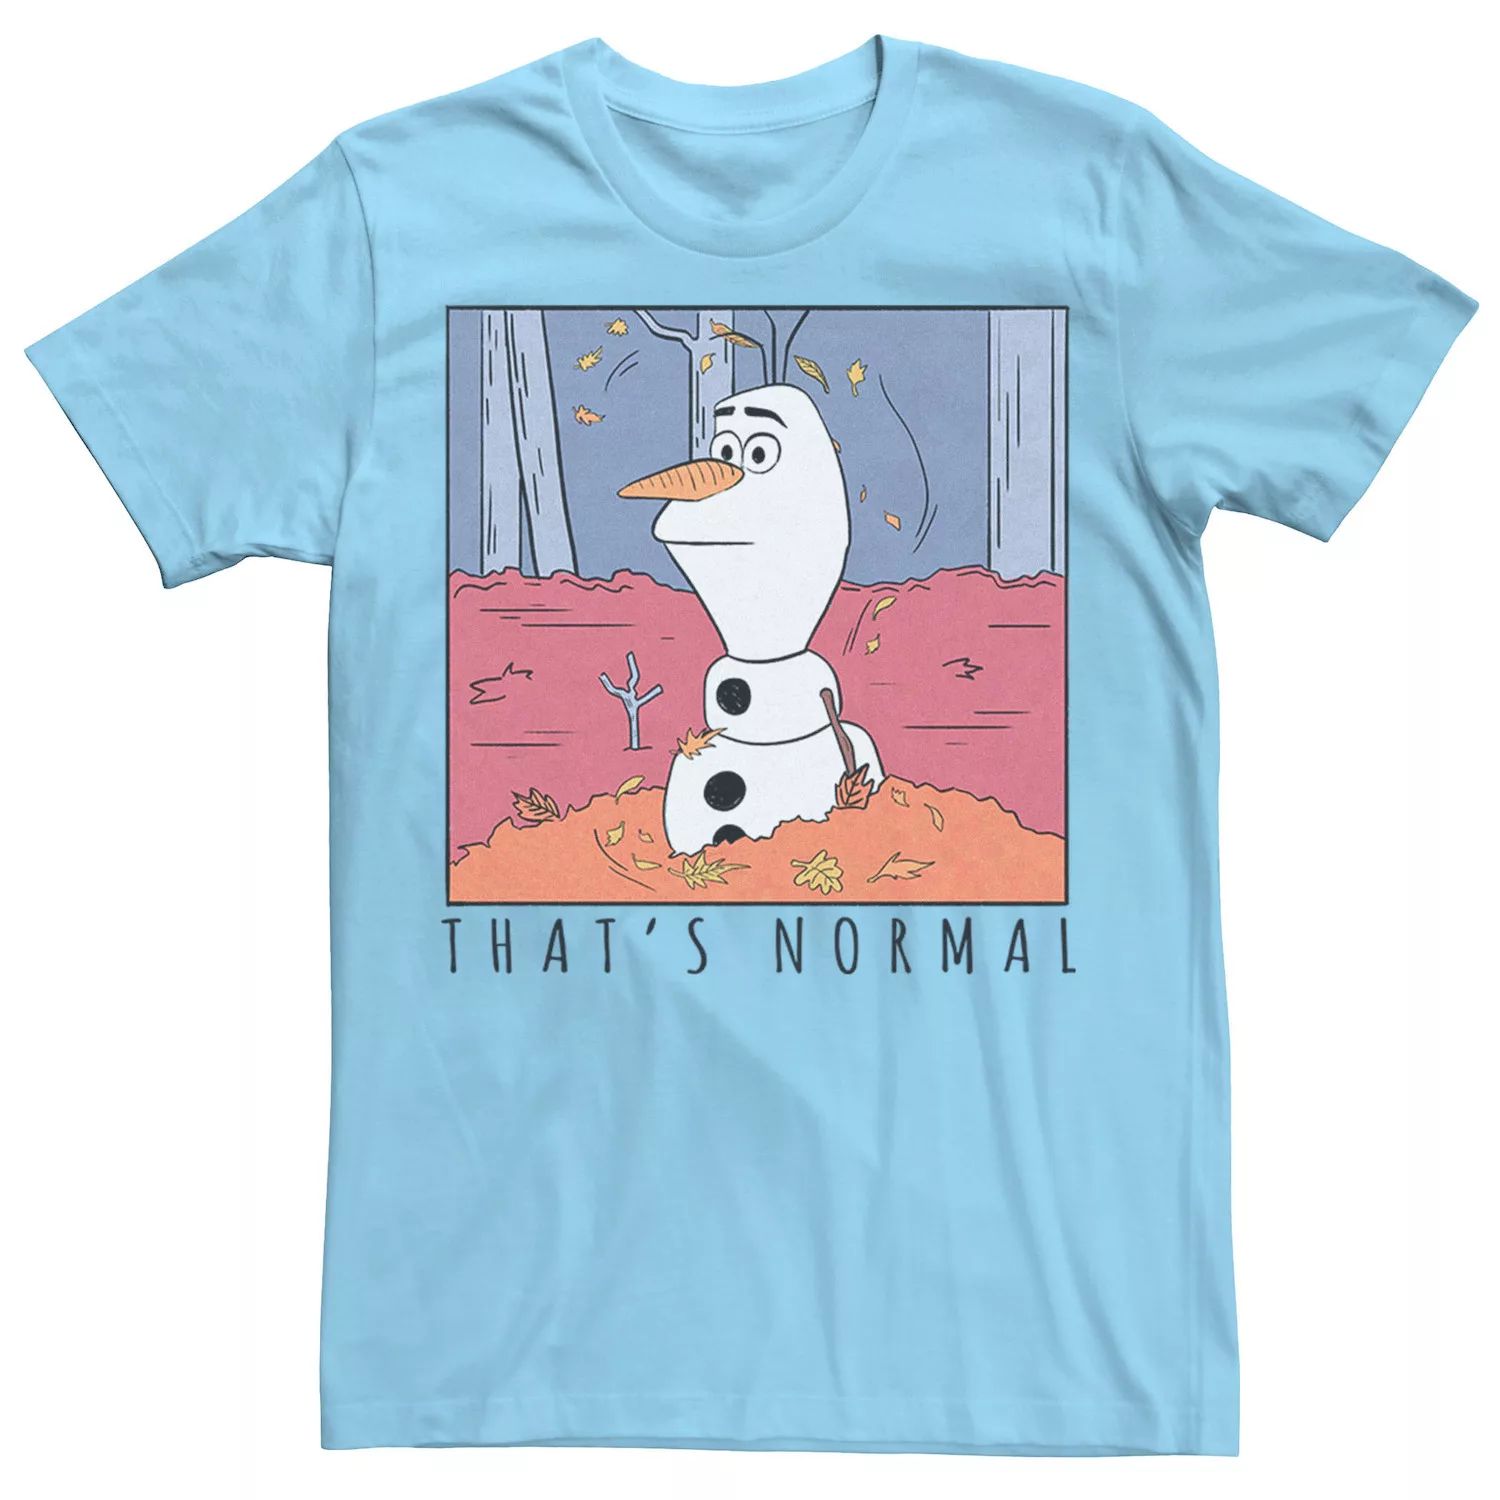 Мужская футболка Frozen 2 Olaf This's Normal Disney